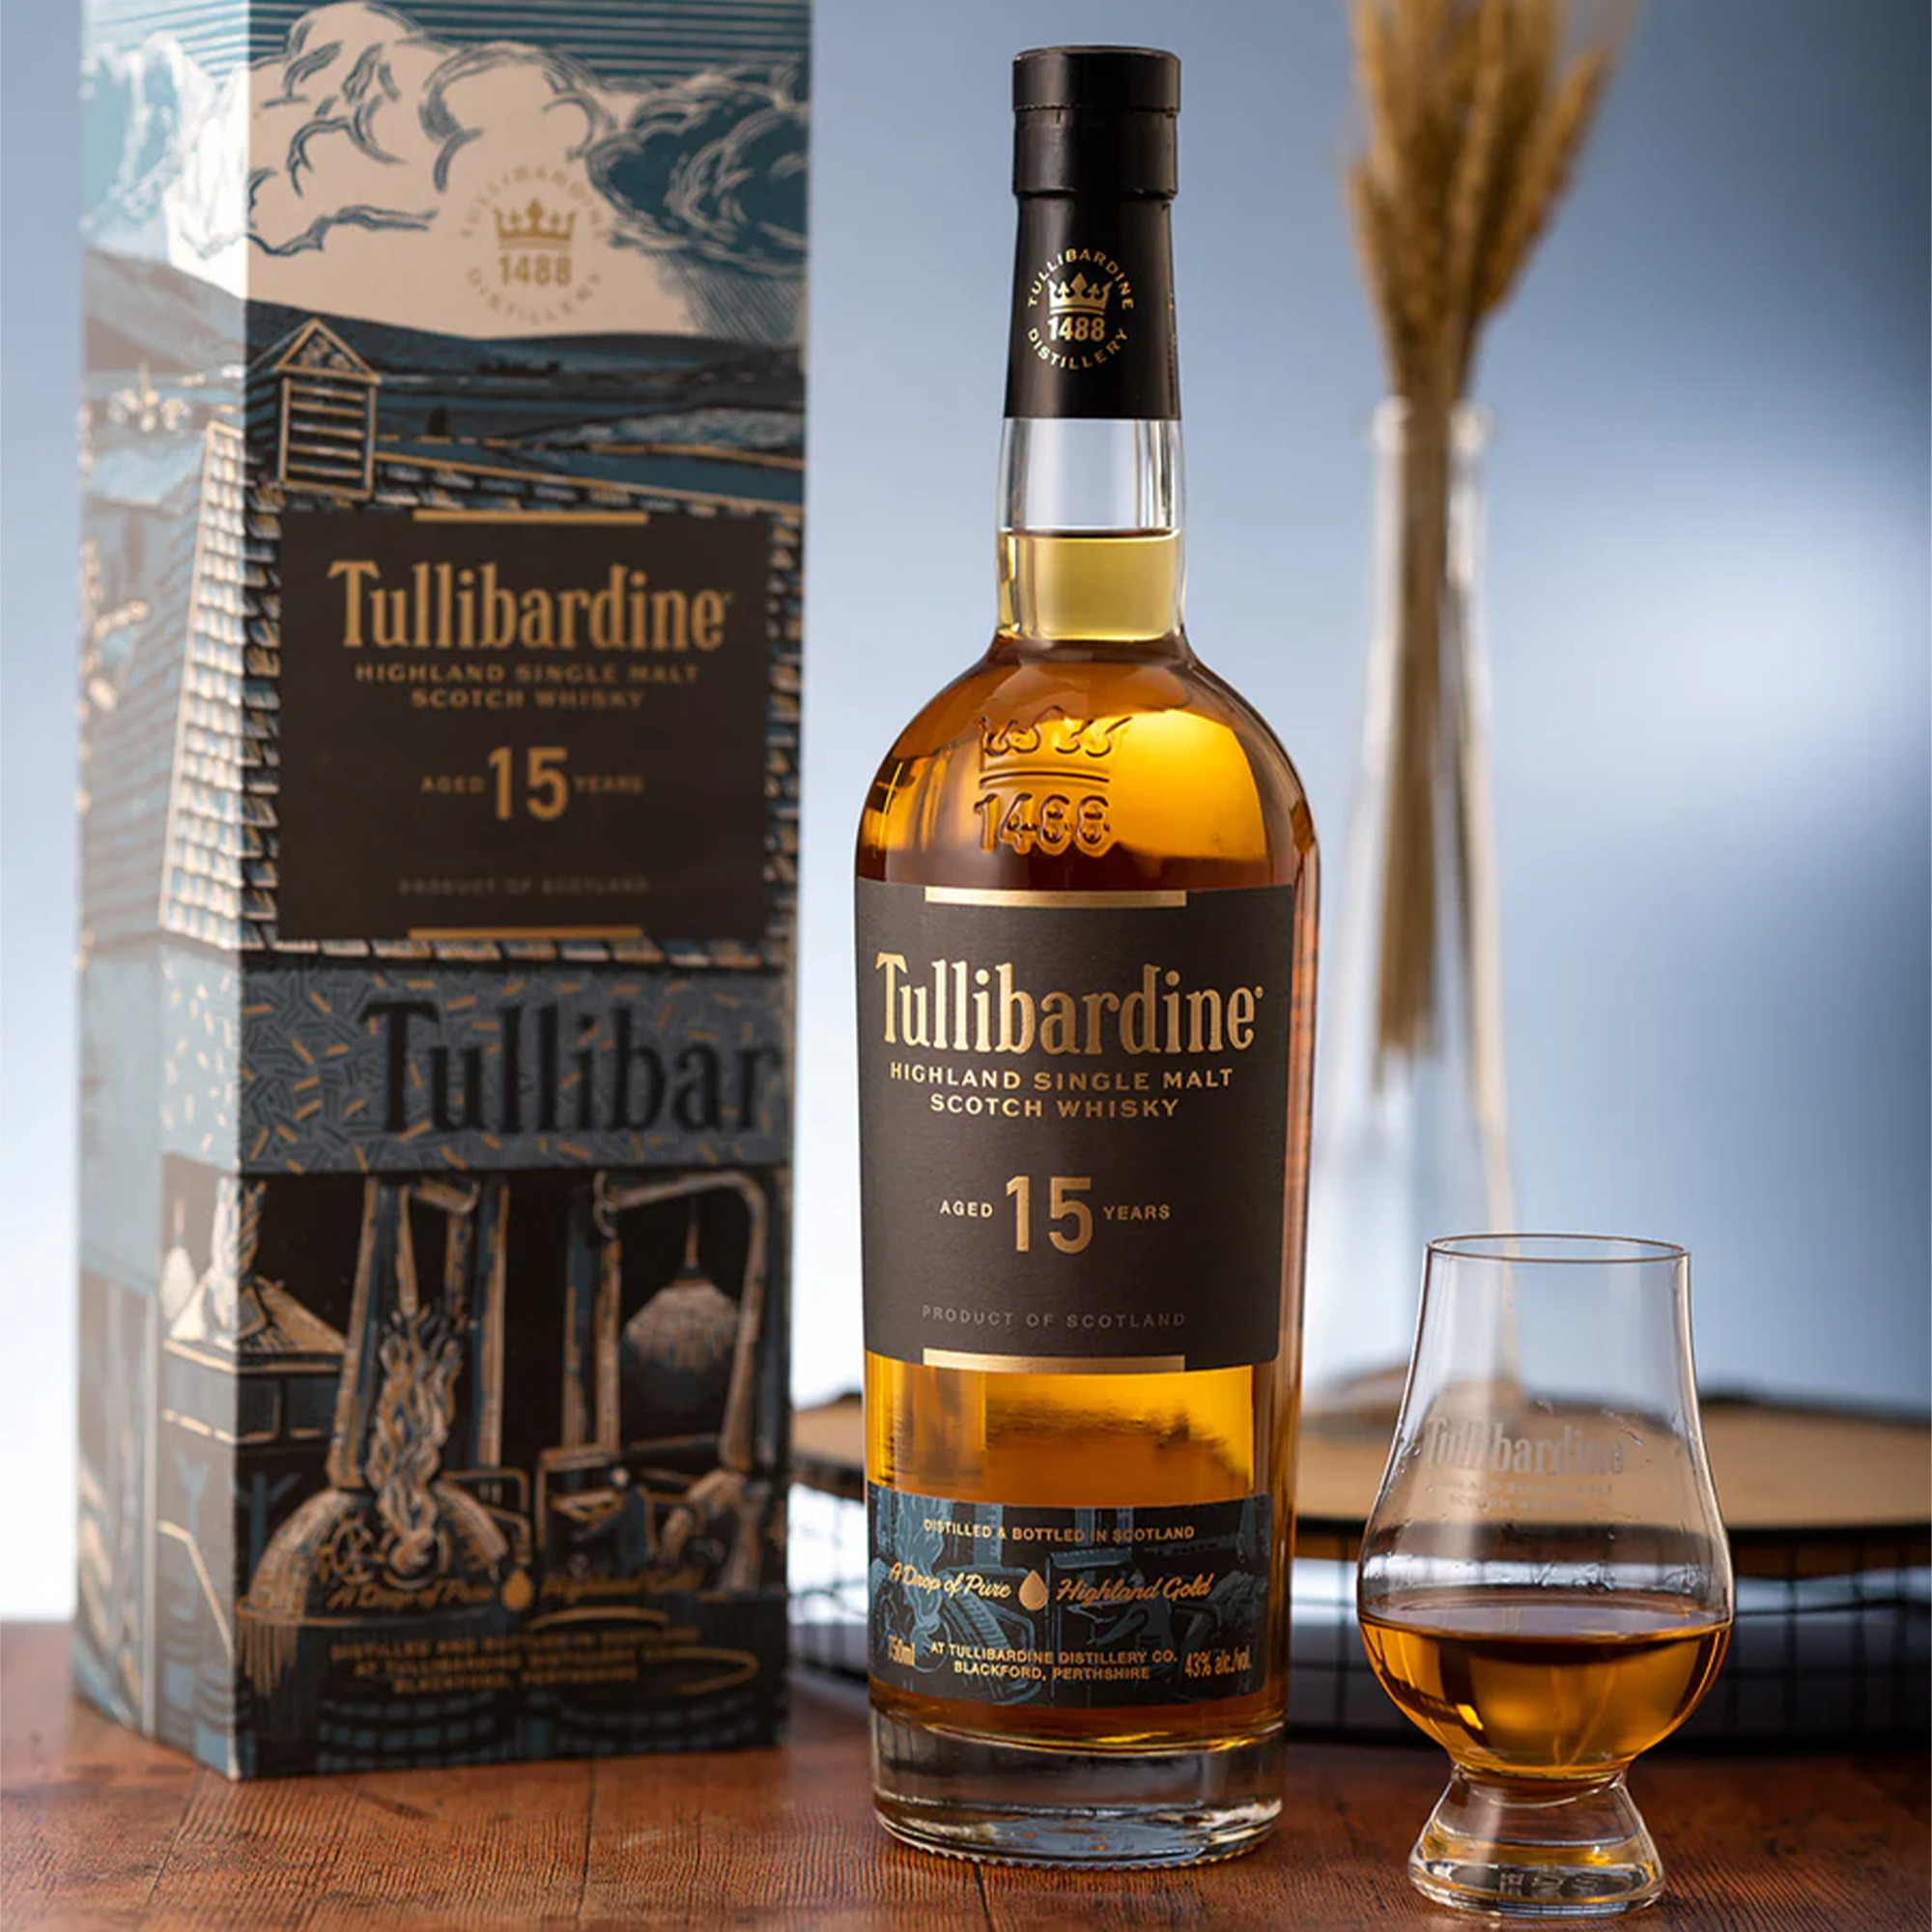 Tullibardine 15 Year Highland Single Malt Scotch